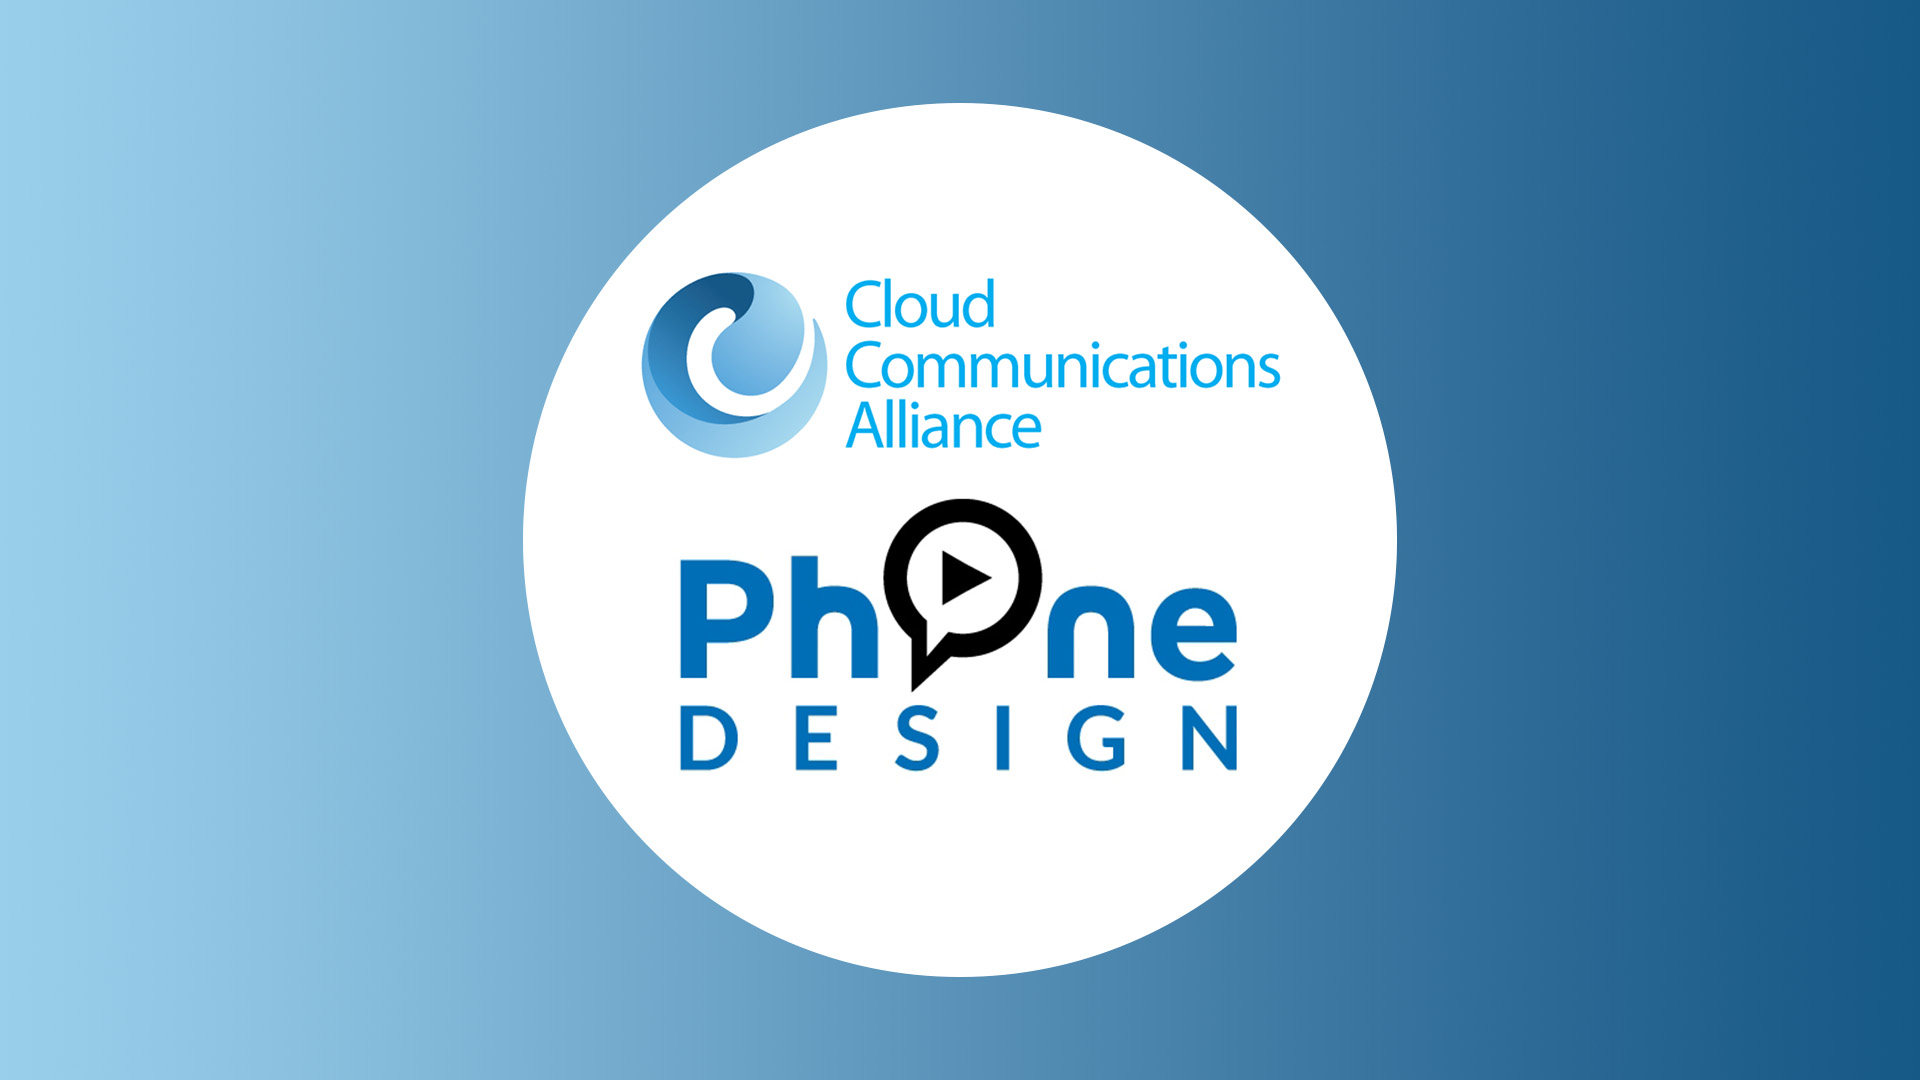 [VIDEO] International: Phone Design joins the Cloud Communication Alliance